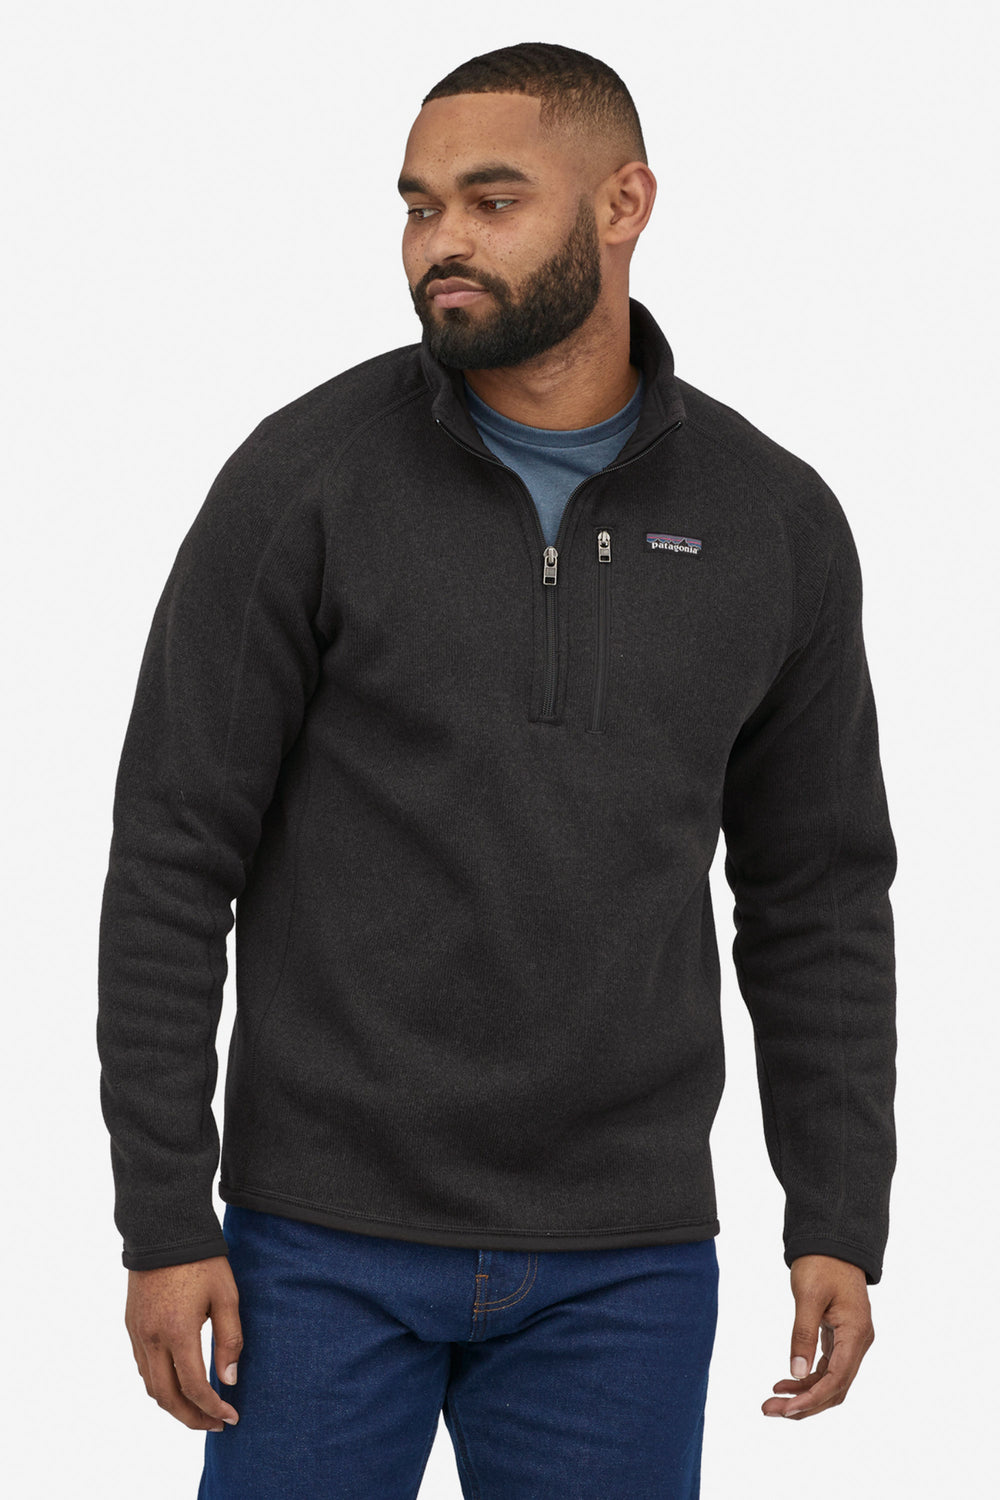    Pukas-Surf-Shop-patagonia-jacket-Better-Sweater